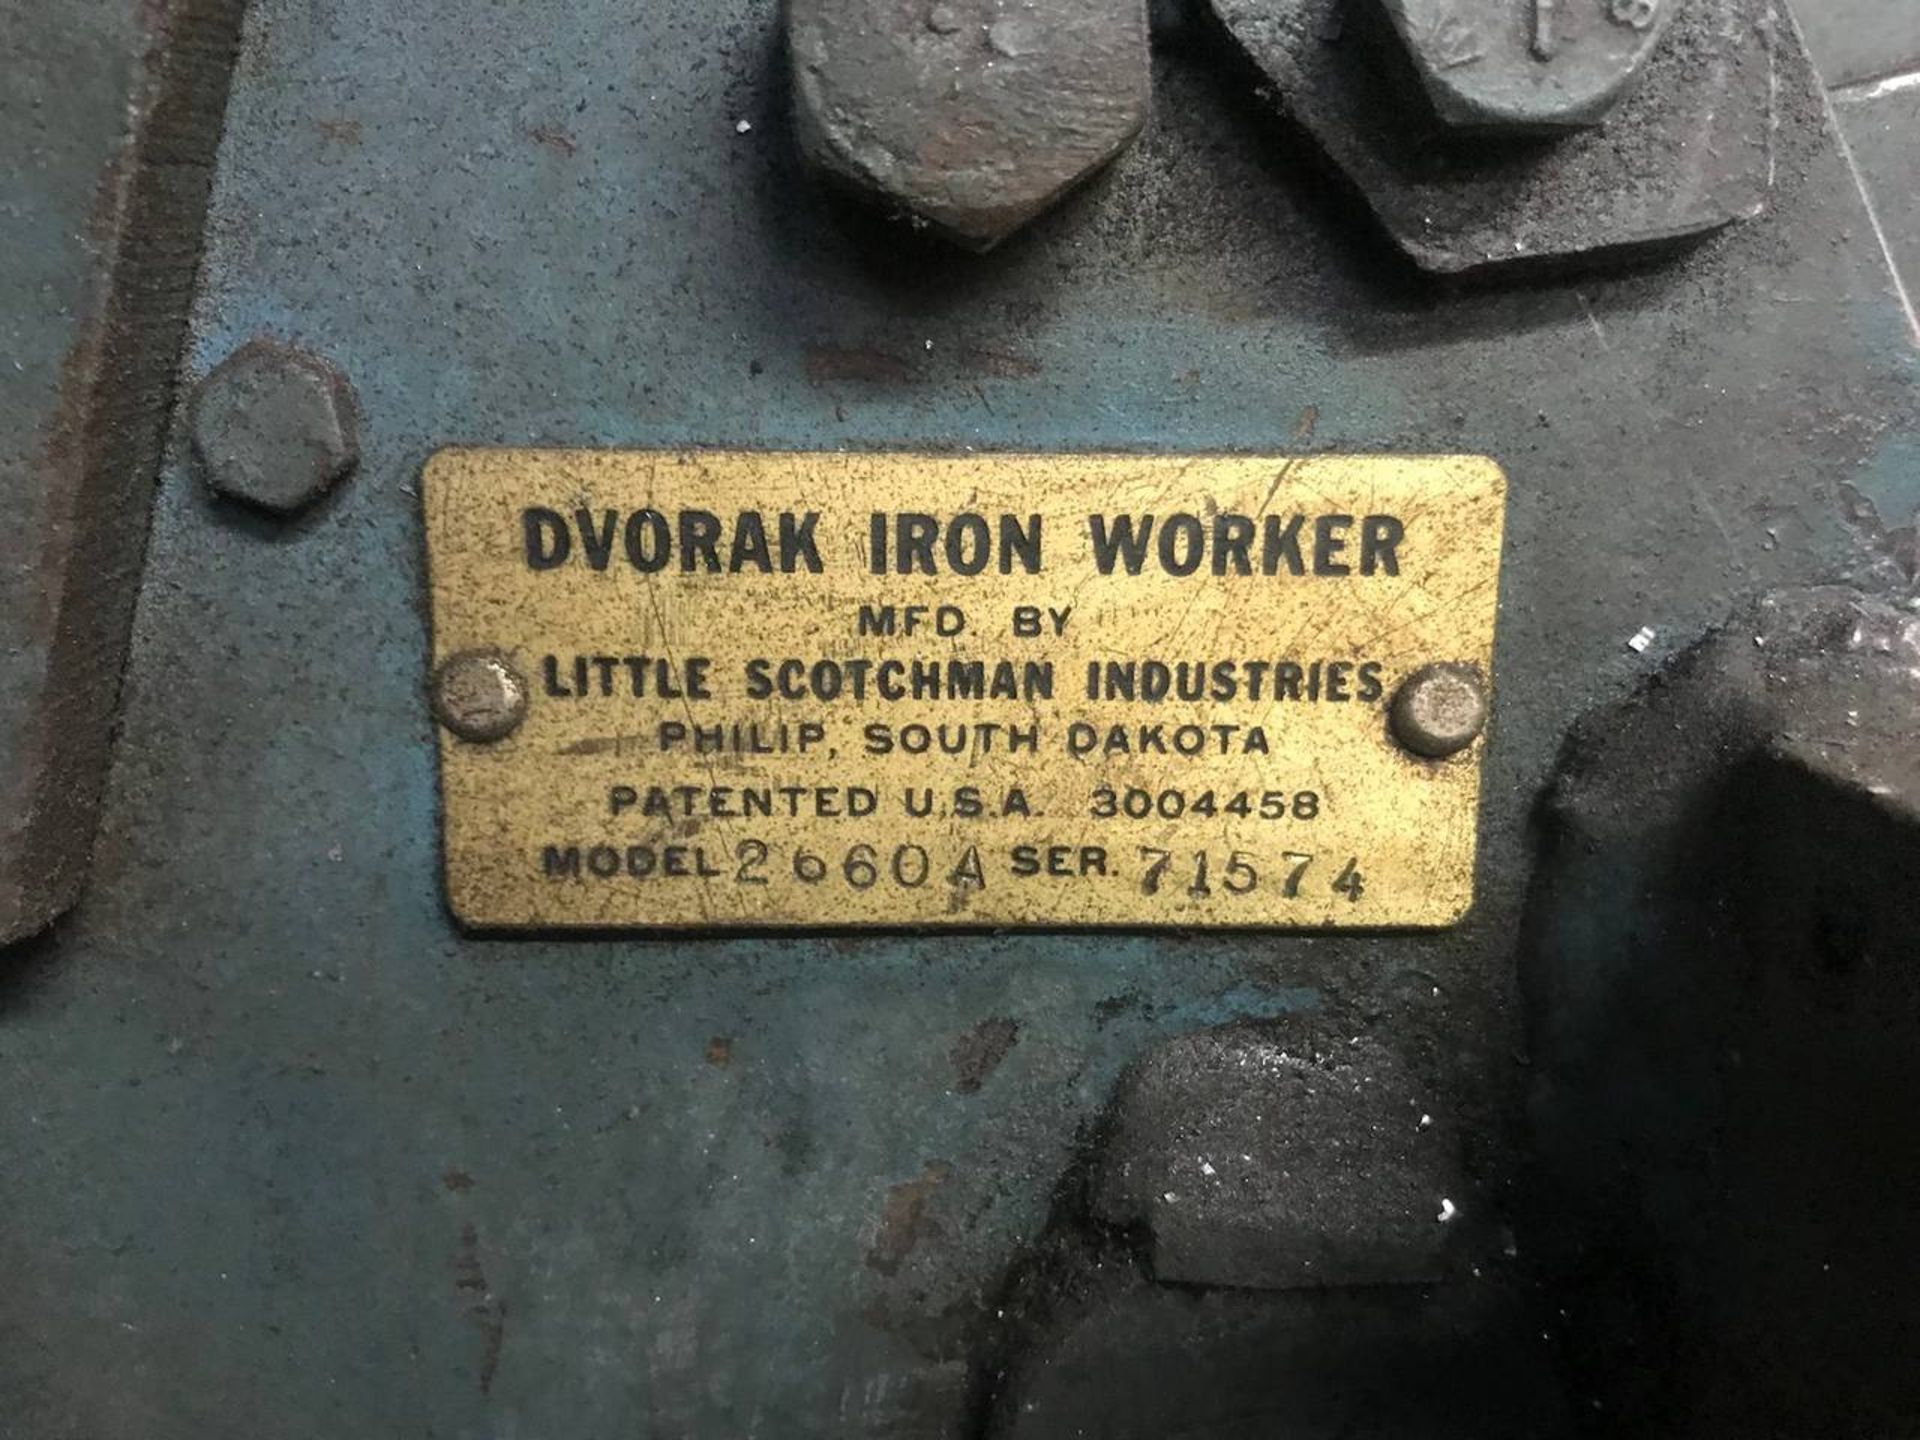 DVORAK 20664 Hydraulic Iron Worker - Image 3 of 3